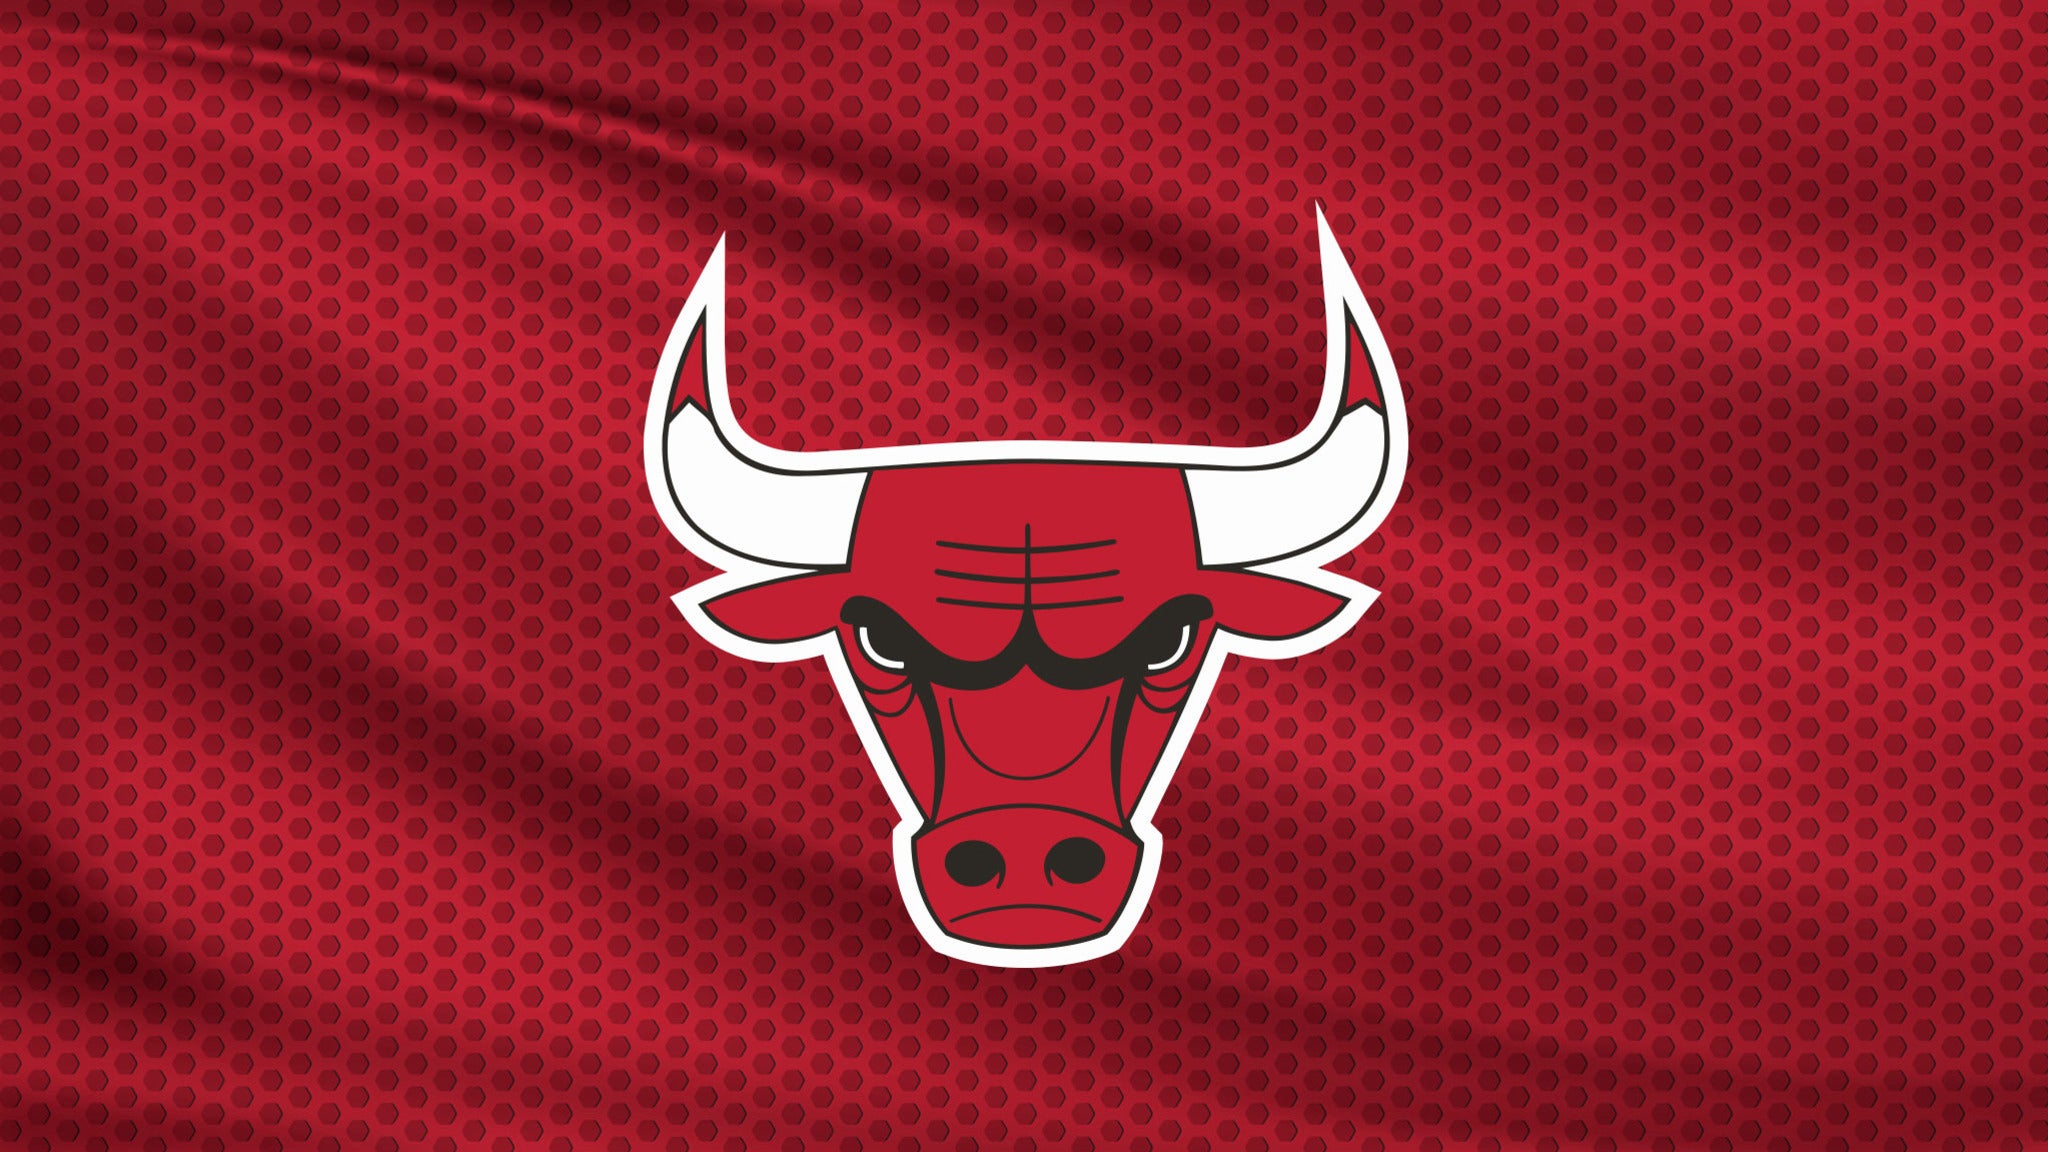 Chicago Bulls vs. Houston Rockets